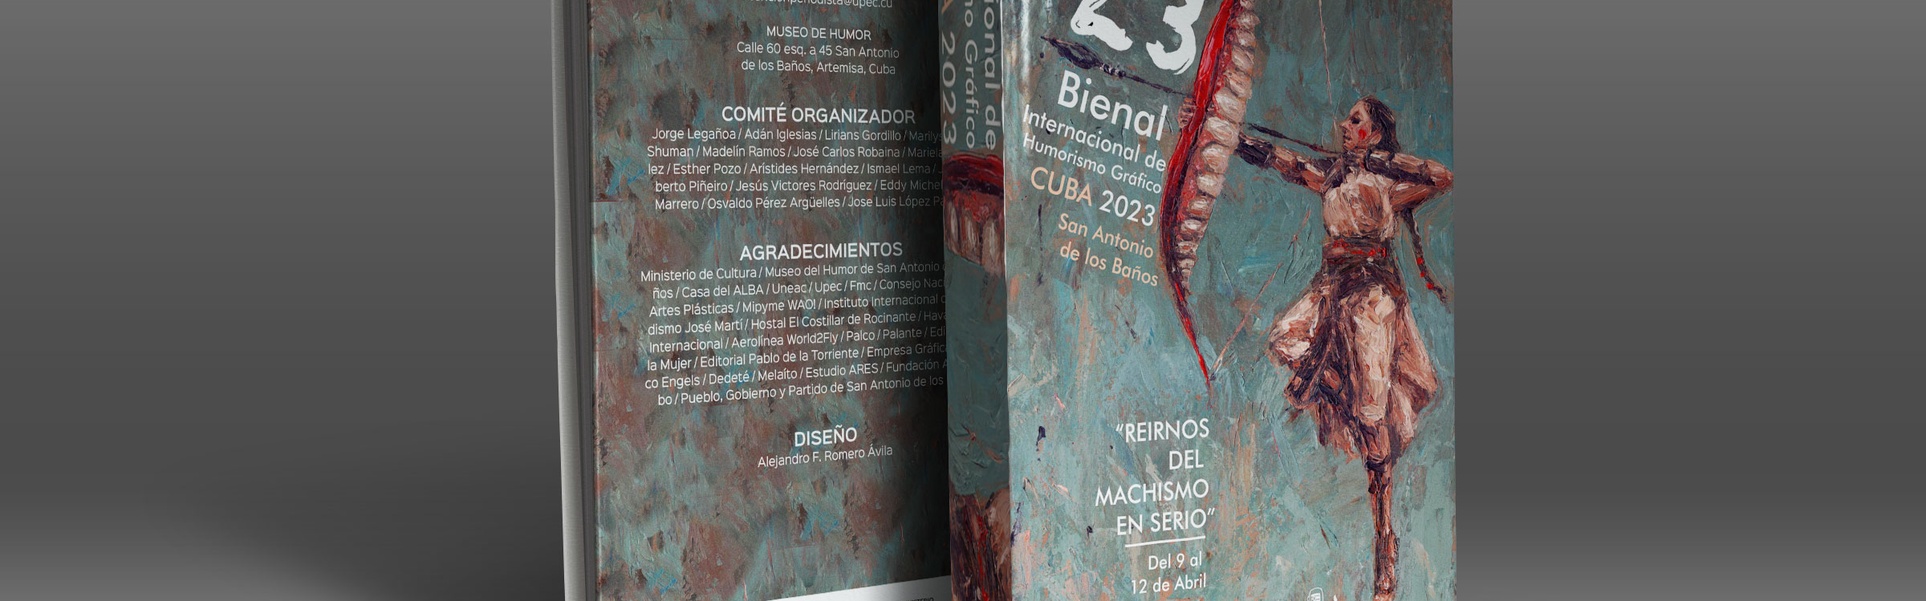 Catálogo /XXIII Bienal Internacional De Humor Gráfico, Cuba, 2023